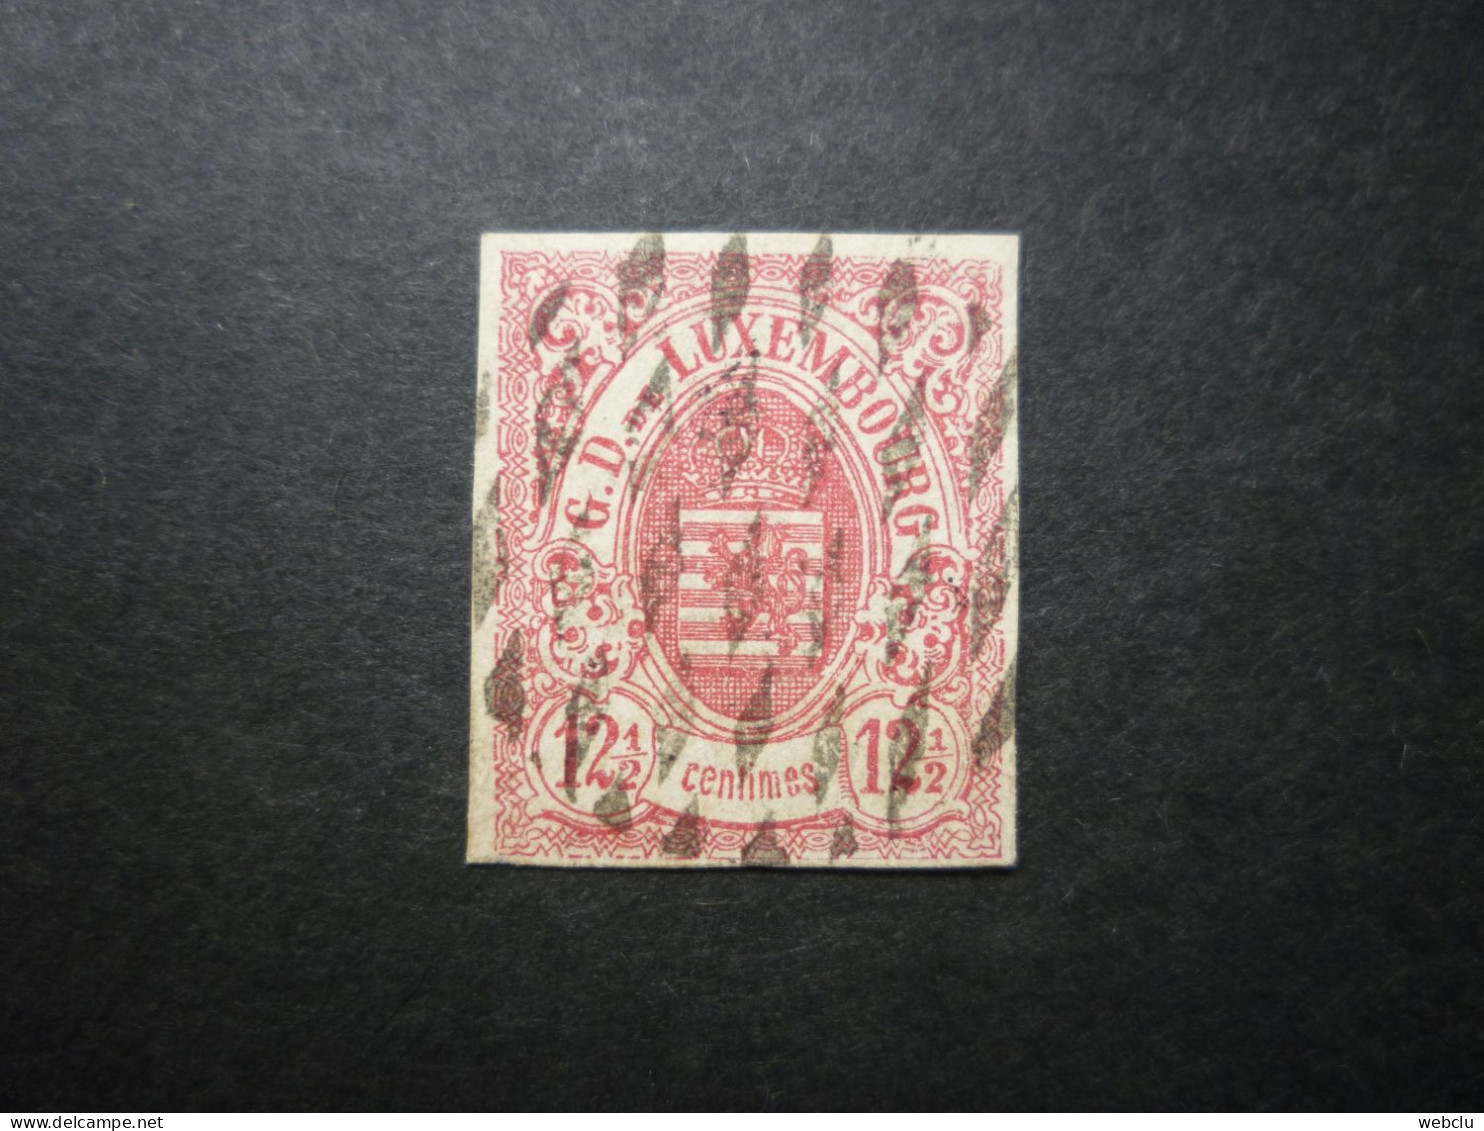 Luxemburg Luxembourg Armoiries 1859 Mi 7 O, Sehr Gut Gerandet, Rauten-Stempel Ettelbruck, PRACHT!! - 1859-1880 Wappen & Heraldik